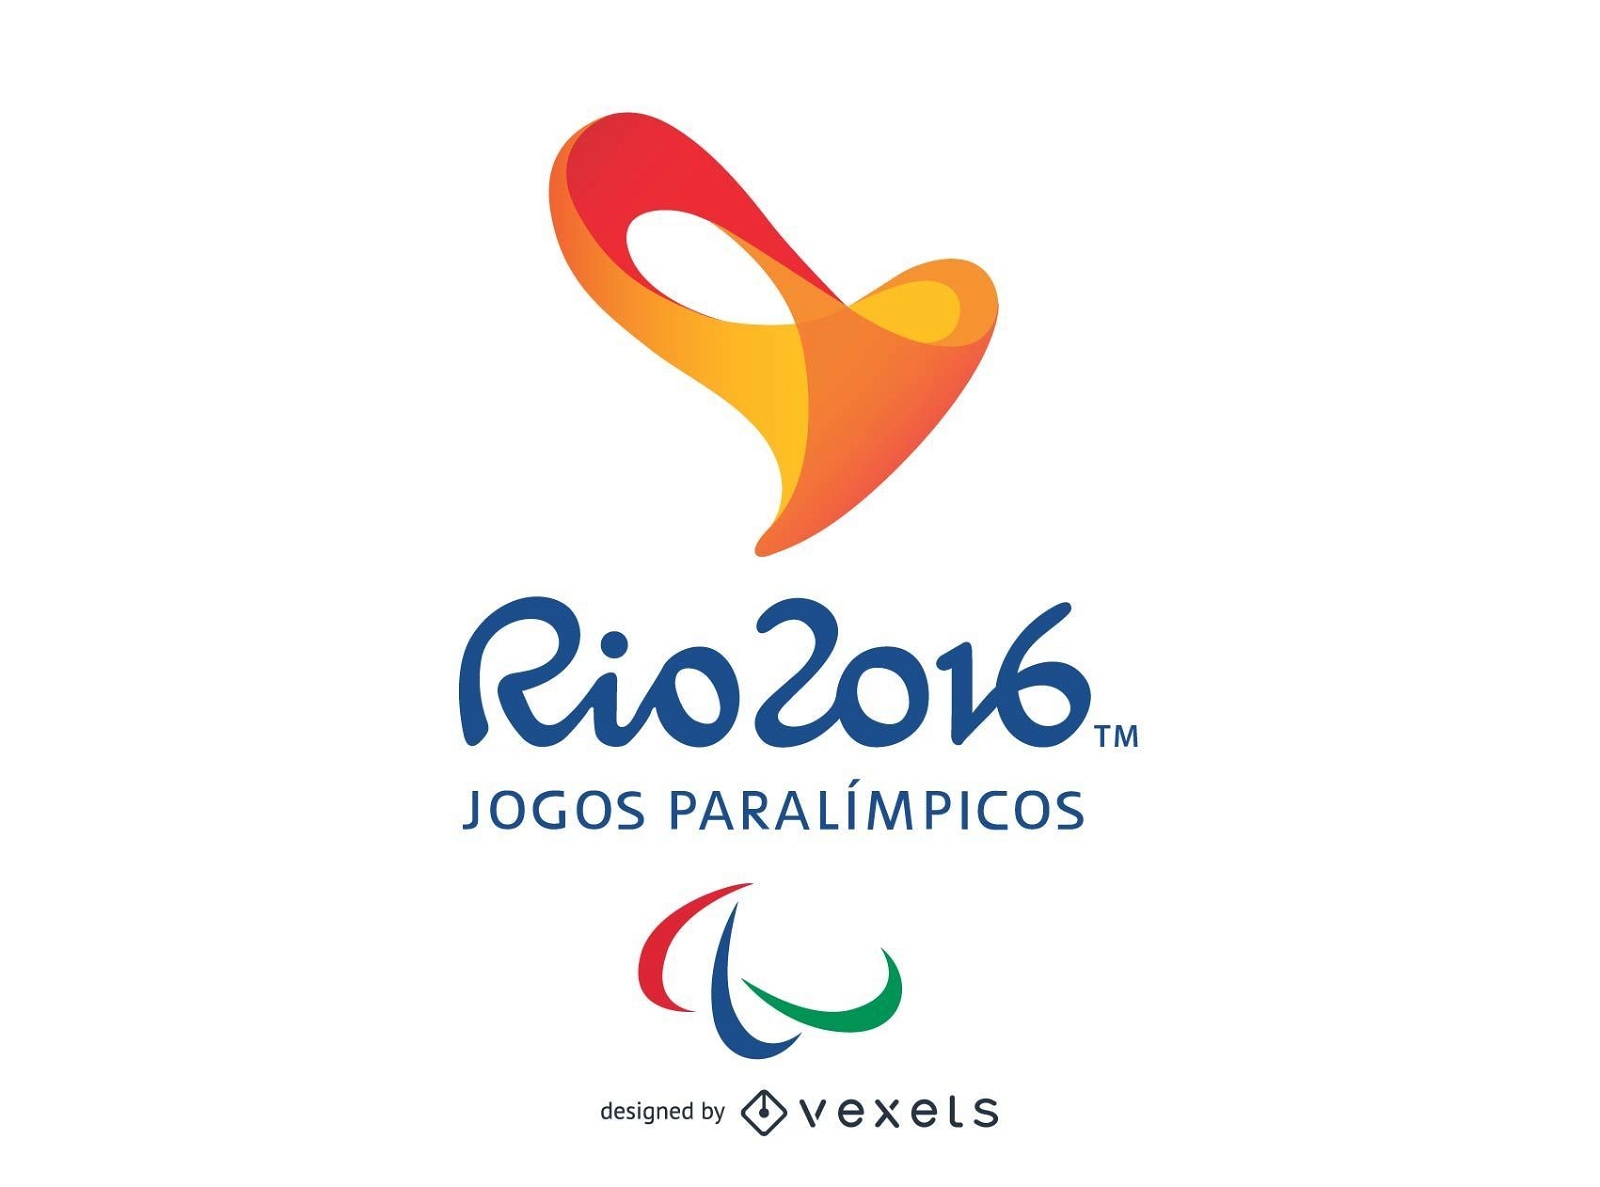 Baixar Vetor De Jogos Paraolímpicos Rio 2016